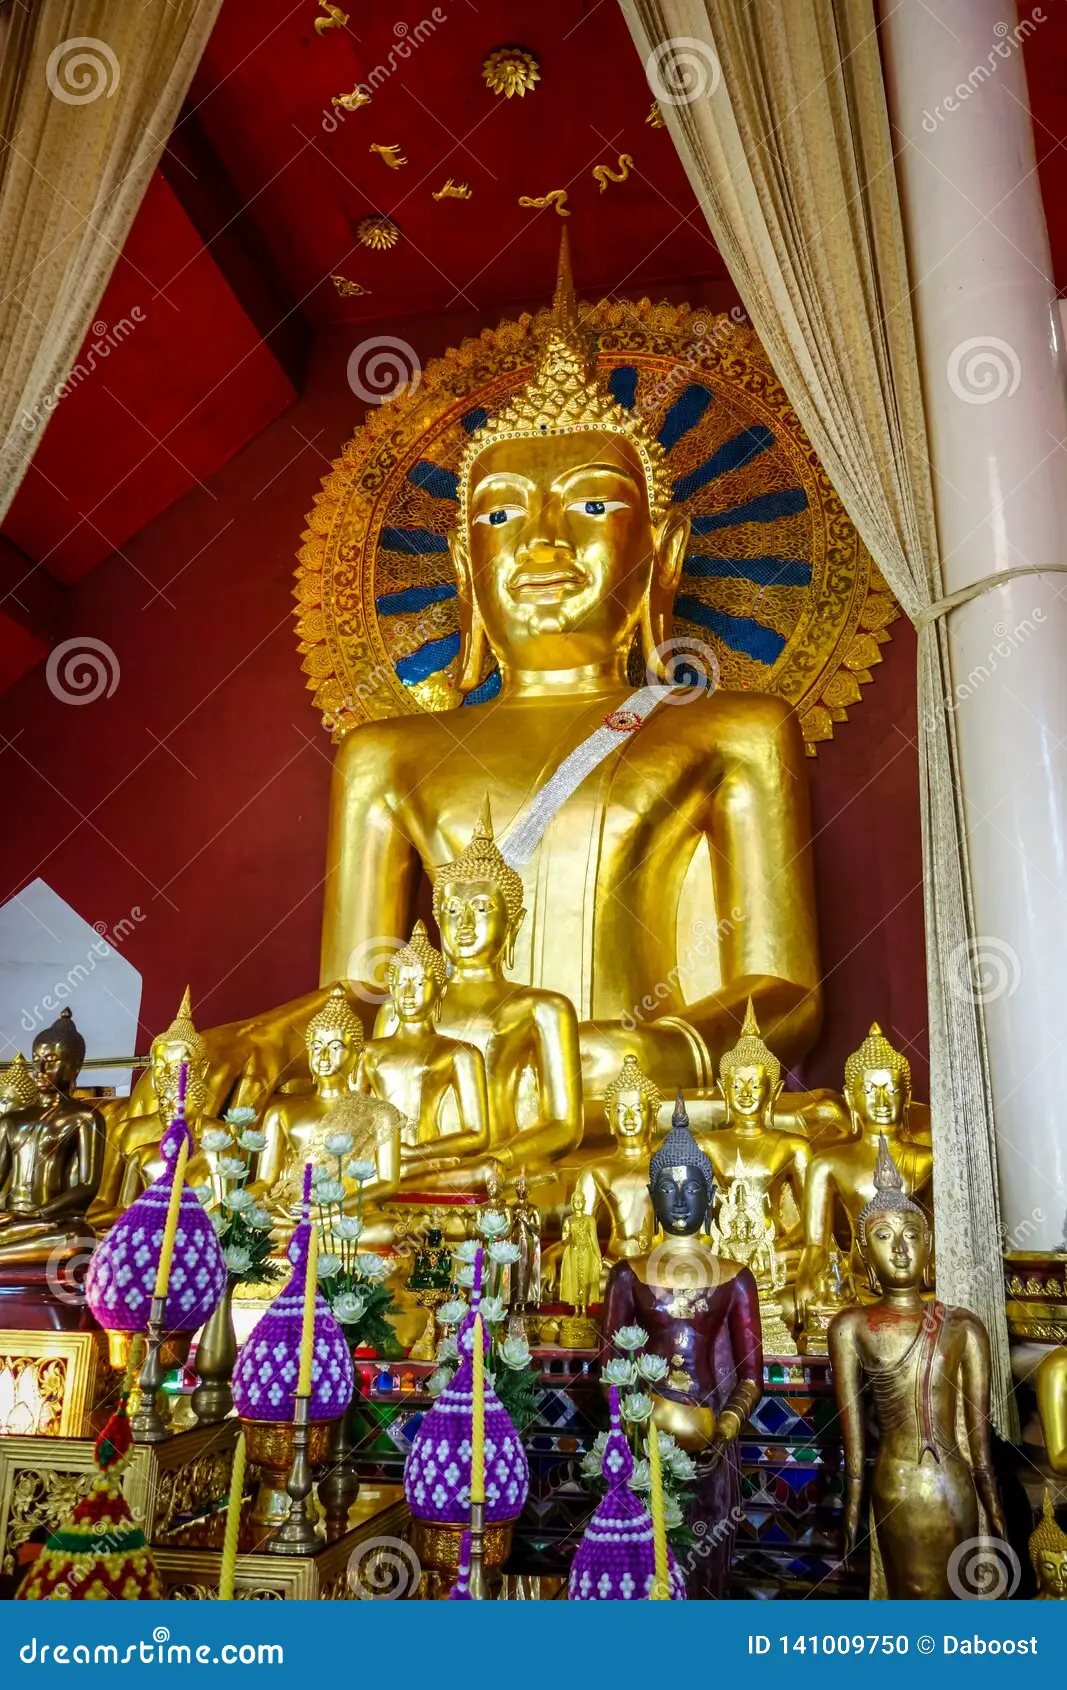 a large gold statue of a buddha